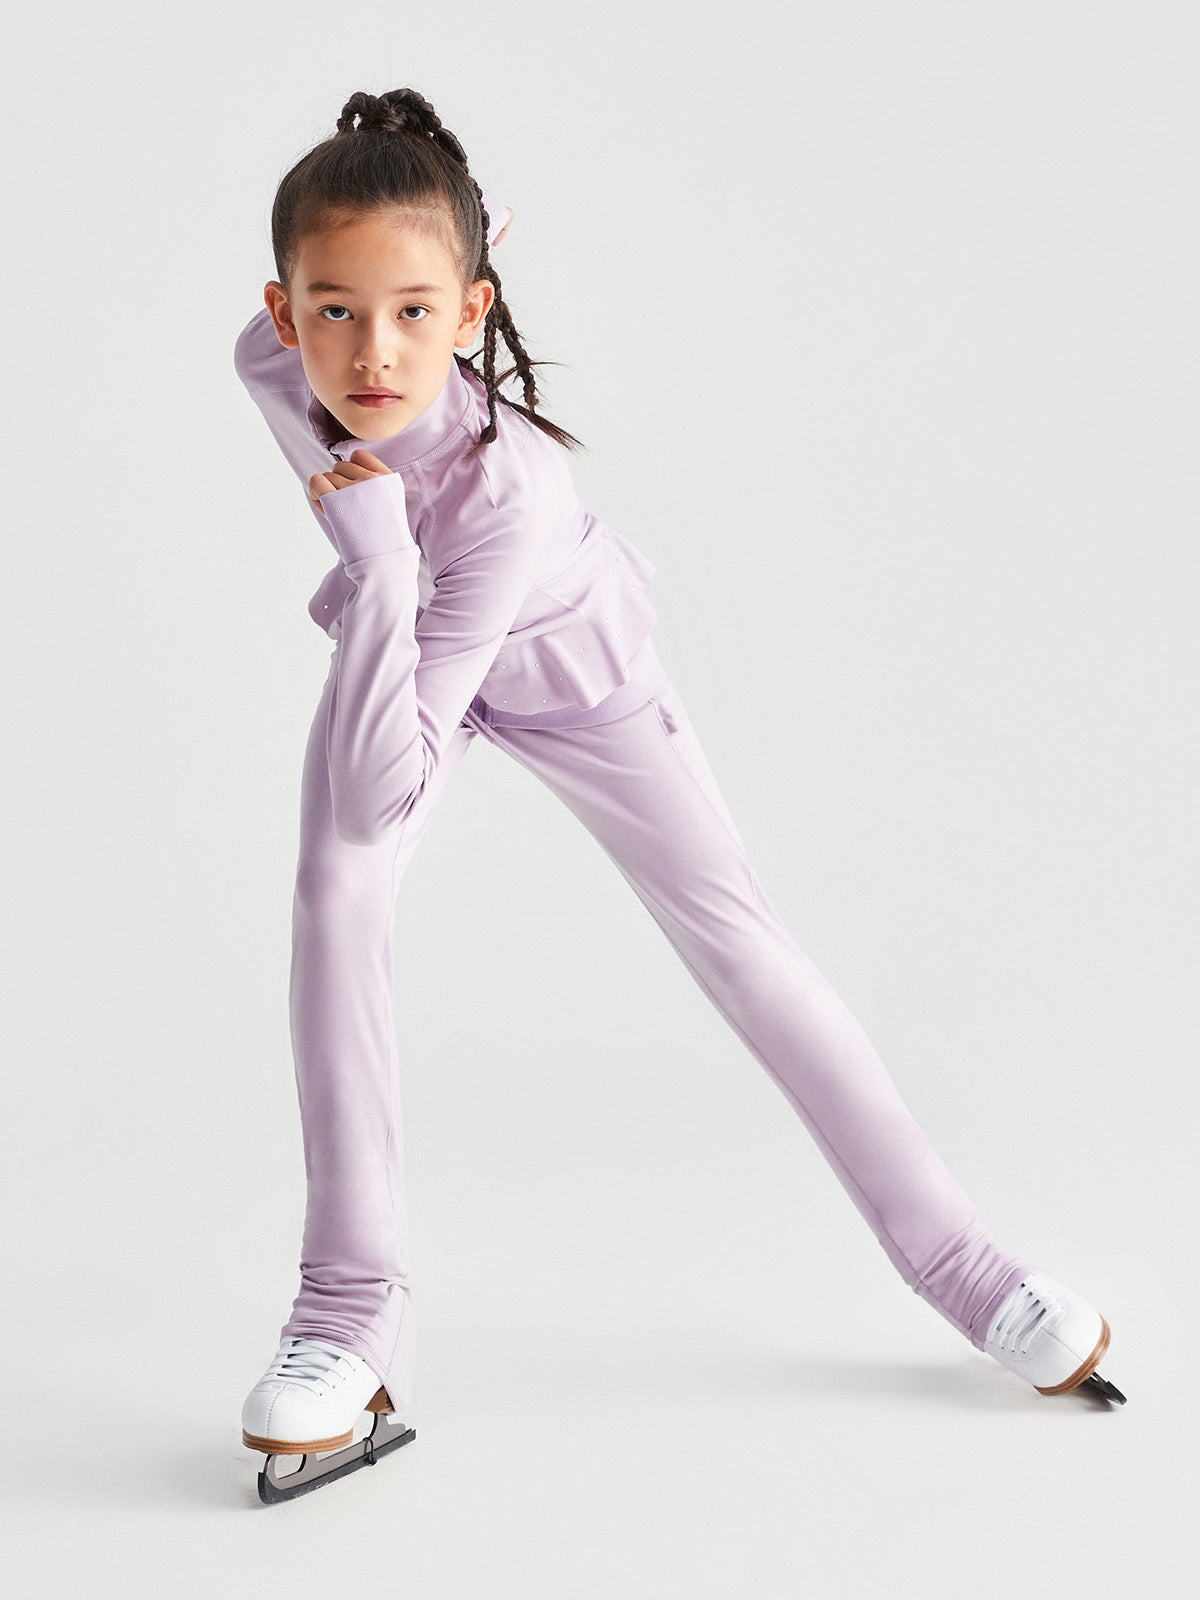 Girls Figure Skating Pants Durable Stretch Fleece Warm Practice Ice Skating  Leggings for Kids Teen Workout Training